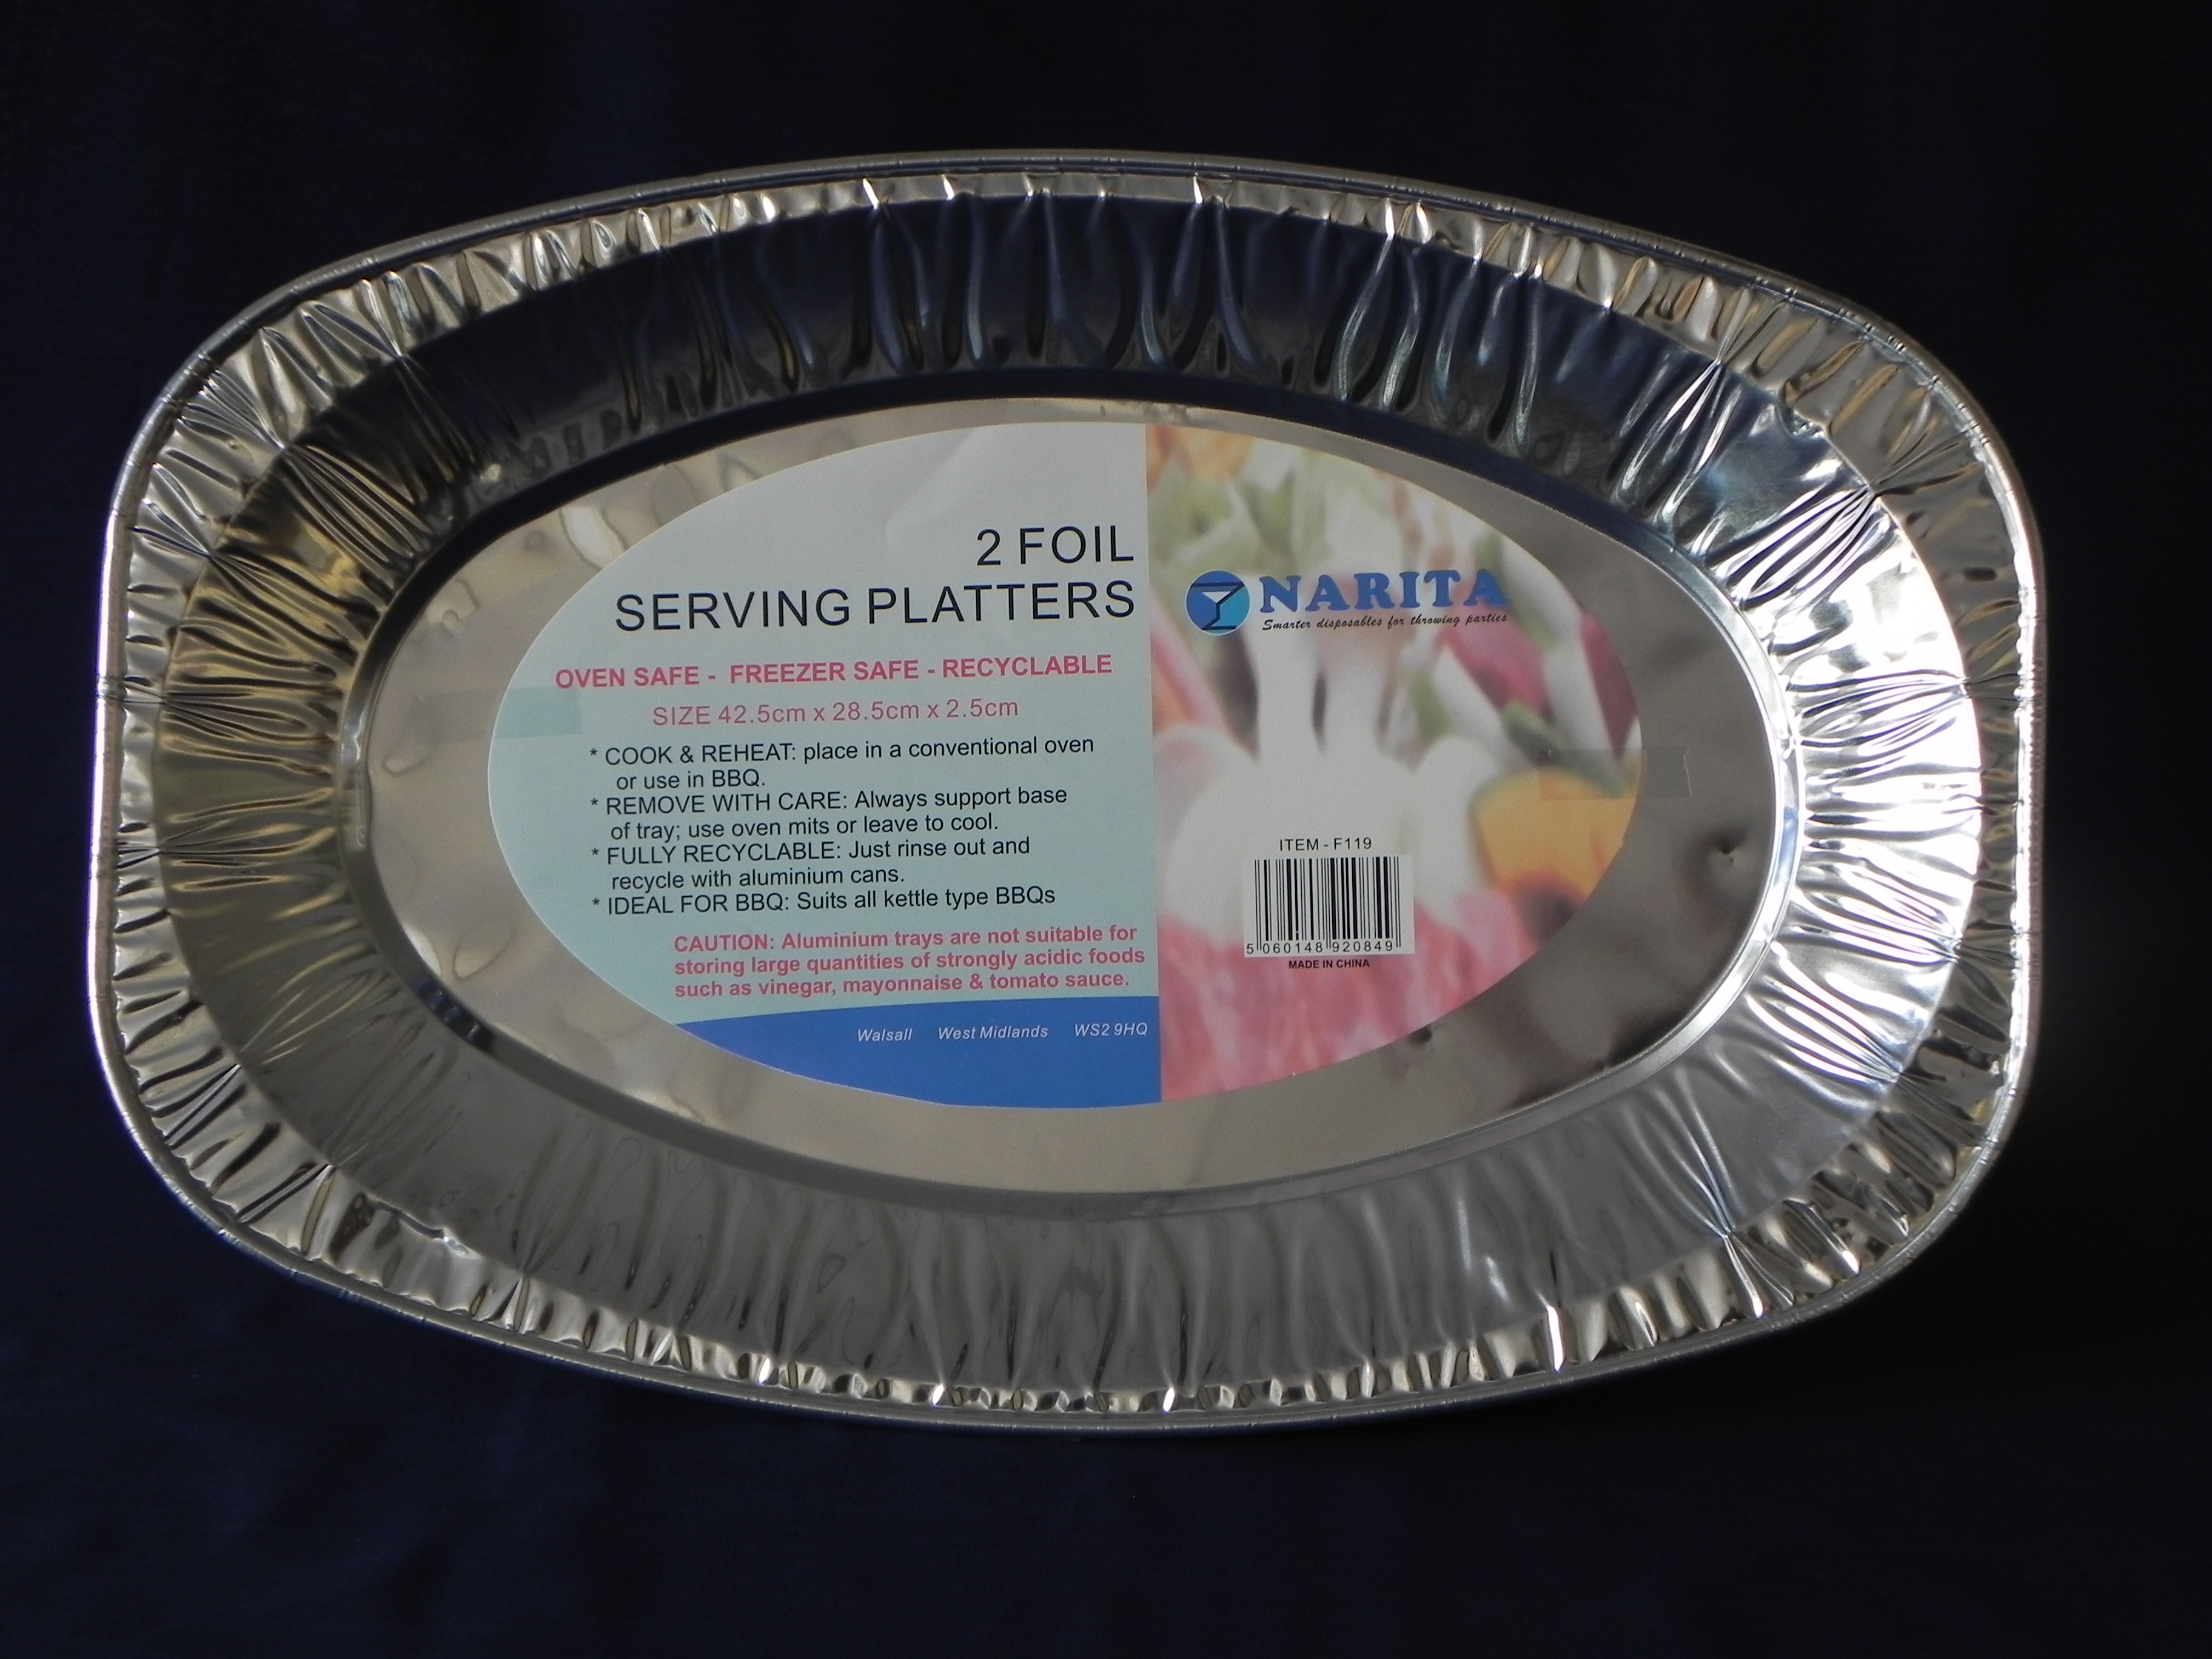 Foil Serving Platters